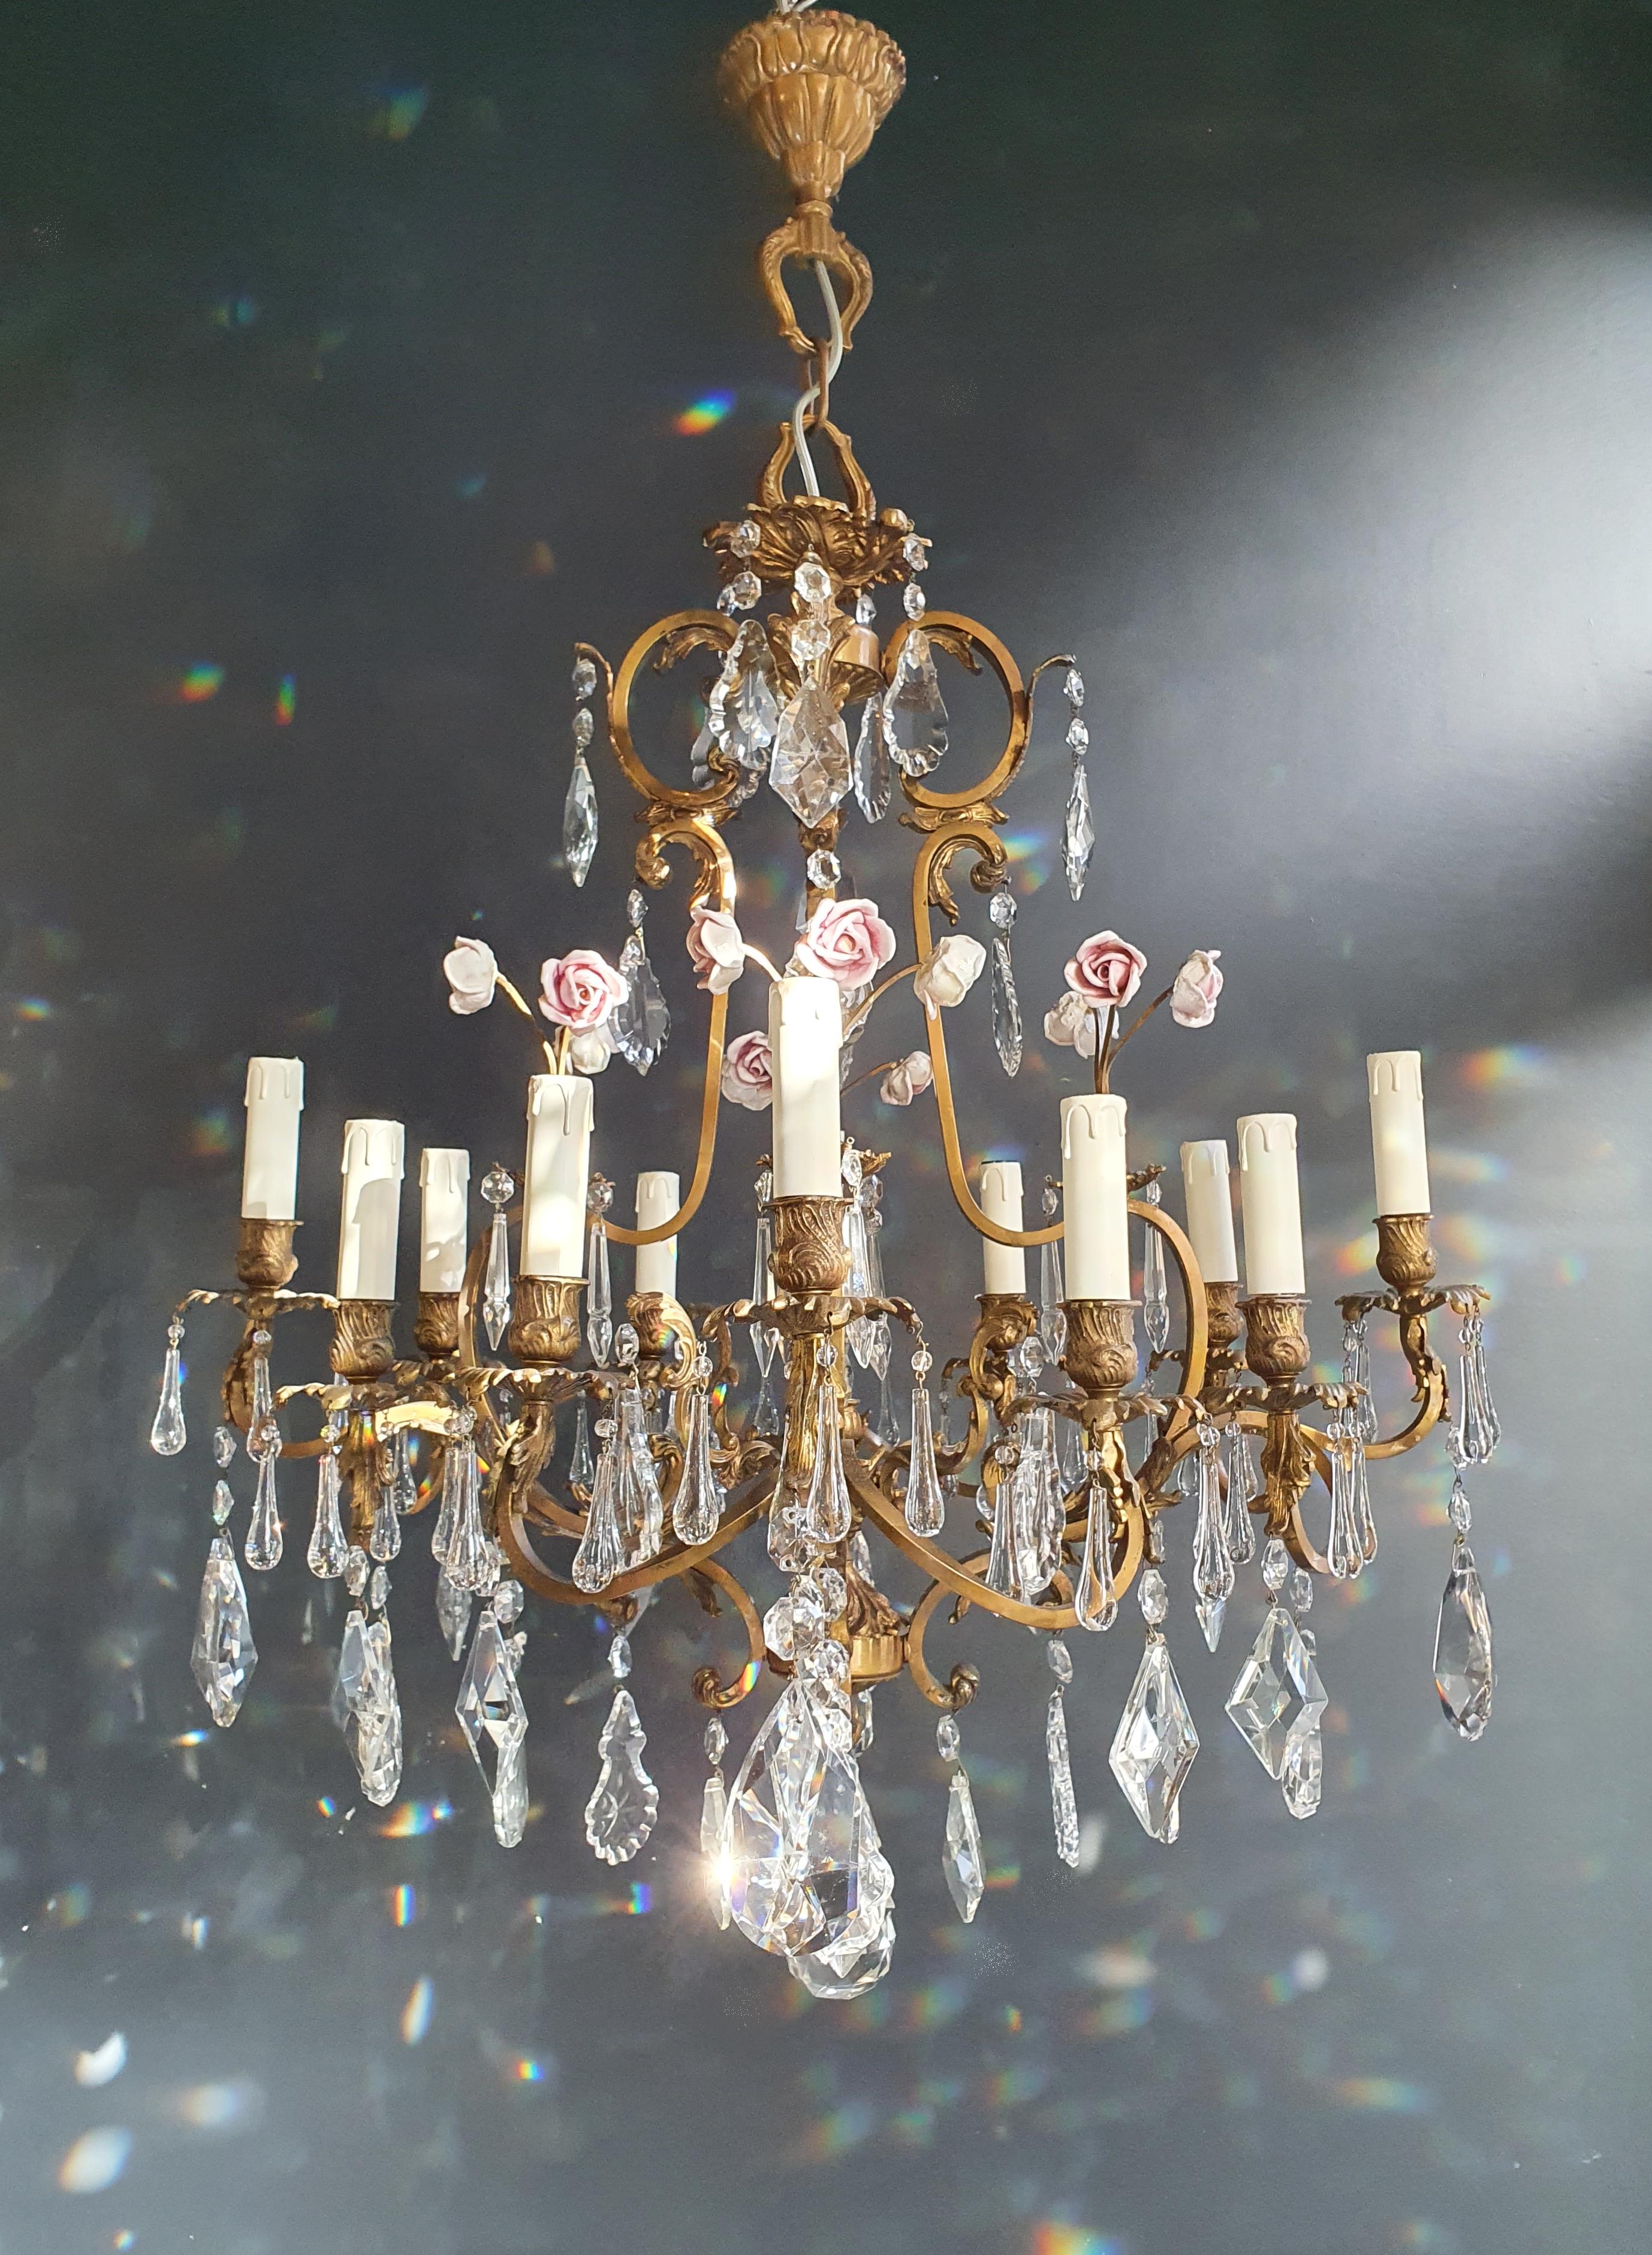 Rose Crystal Antique Chandelier Ceiling Florentiner Lustre Art Nouveau In Good Condition For Sale In Berlin, DE